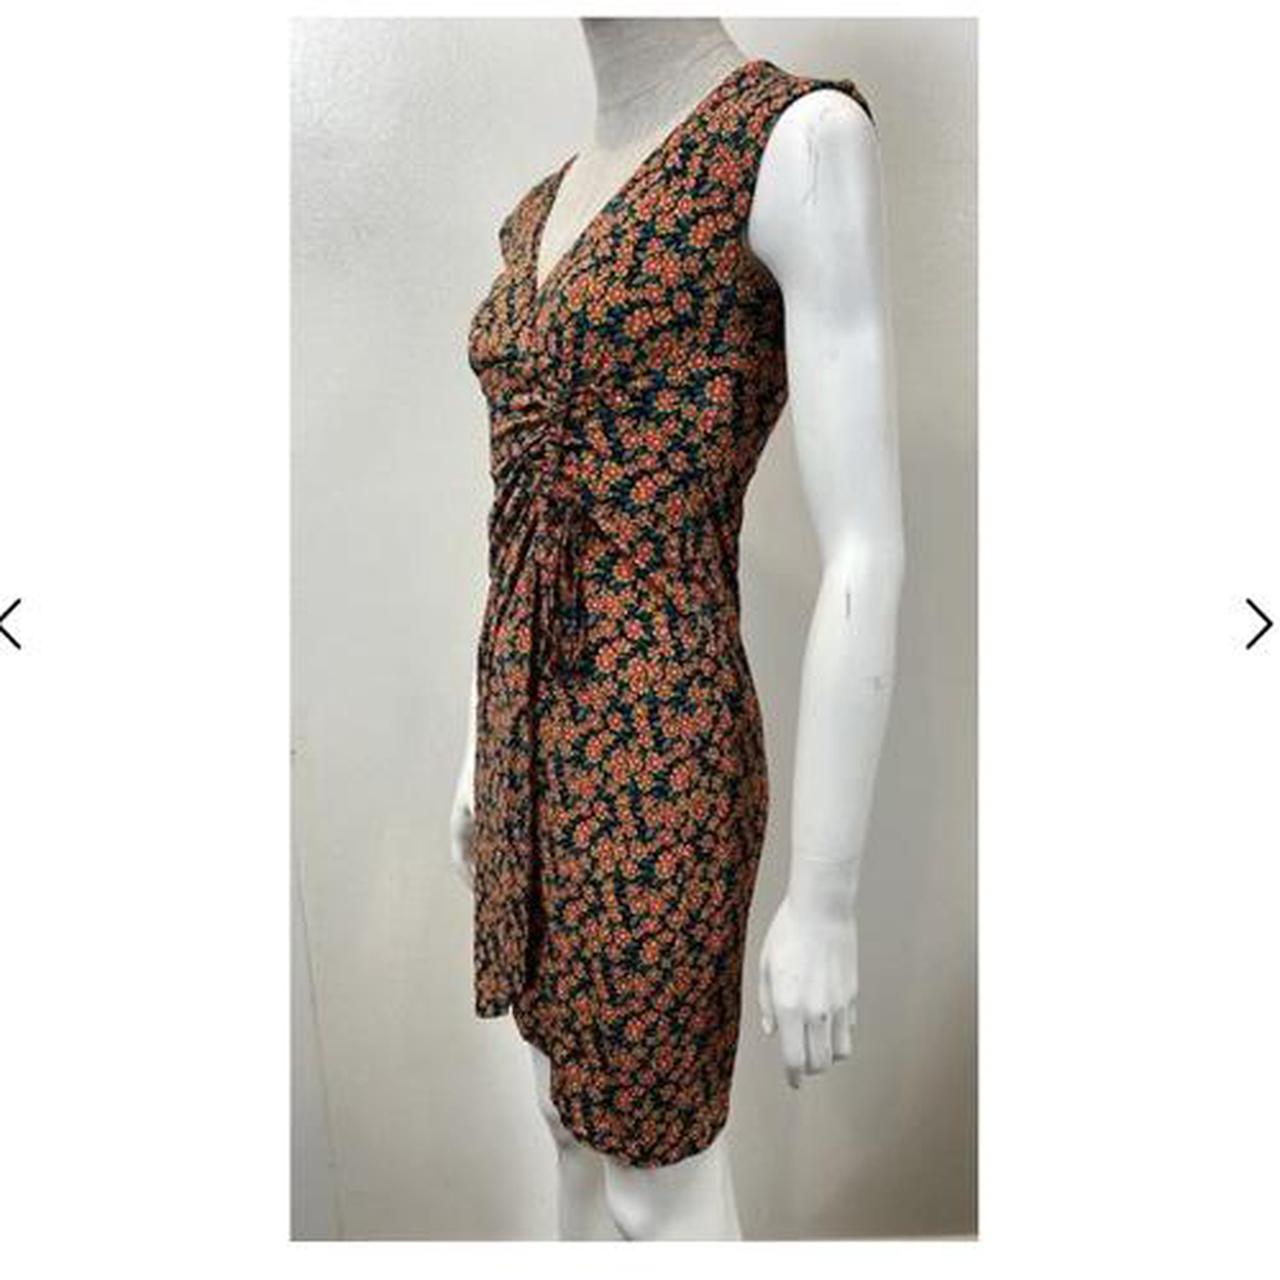 Nanette Lepore floral dress